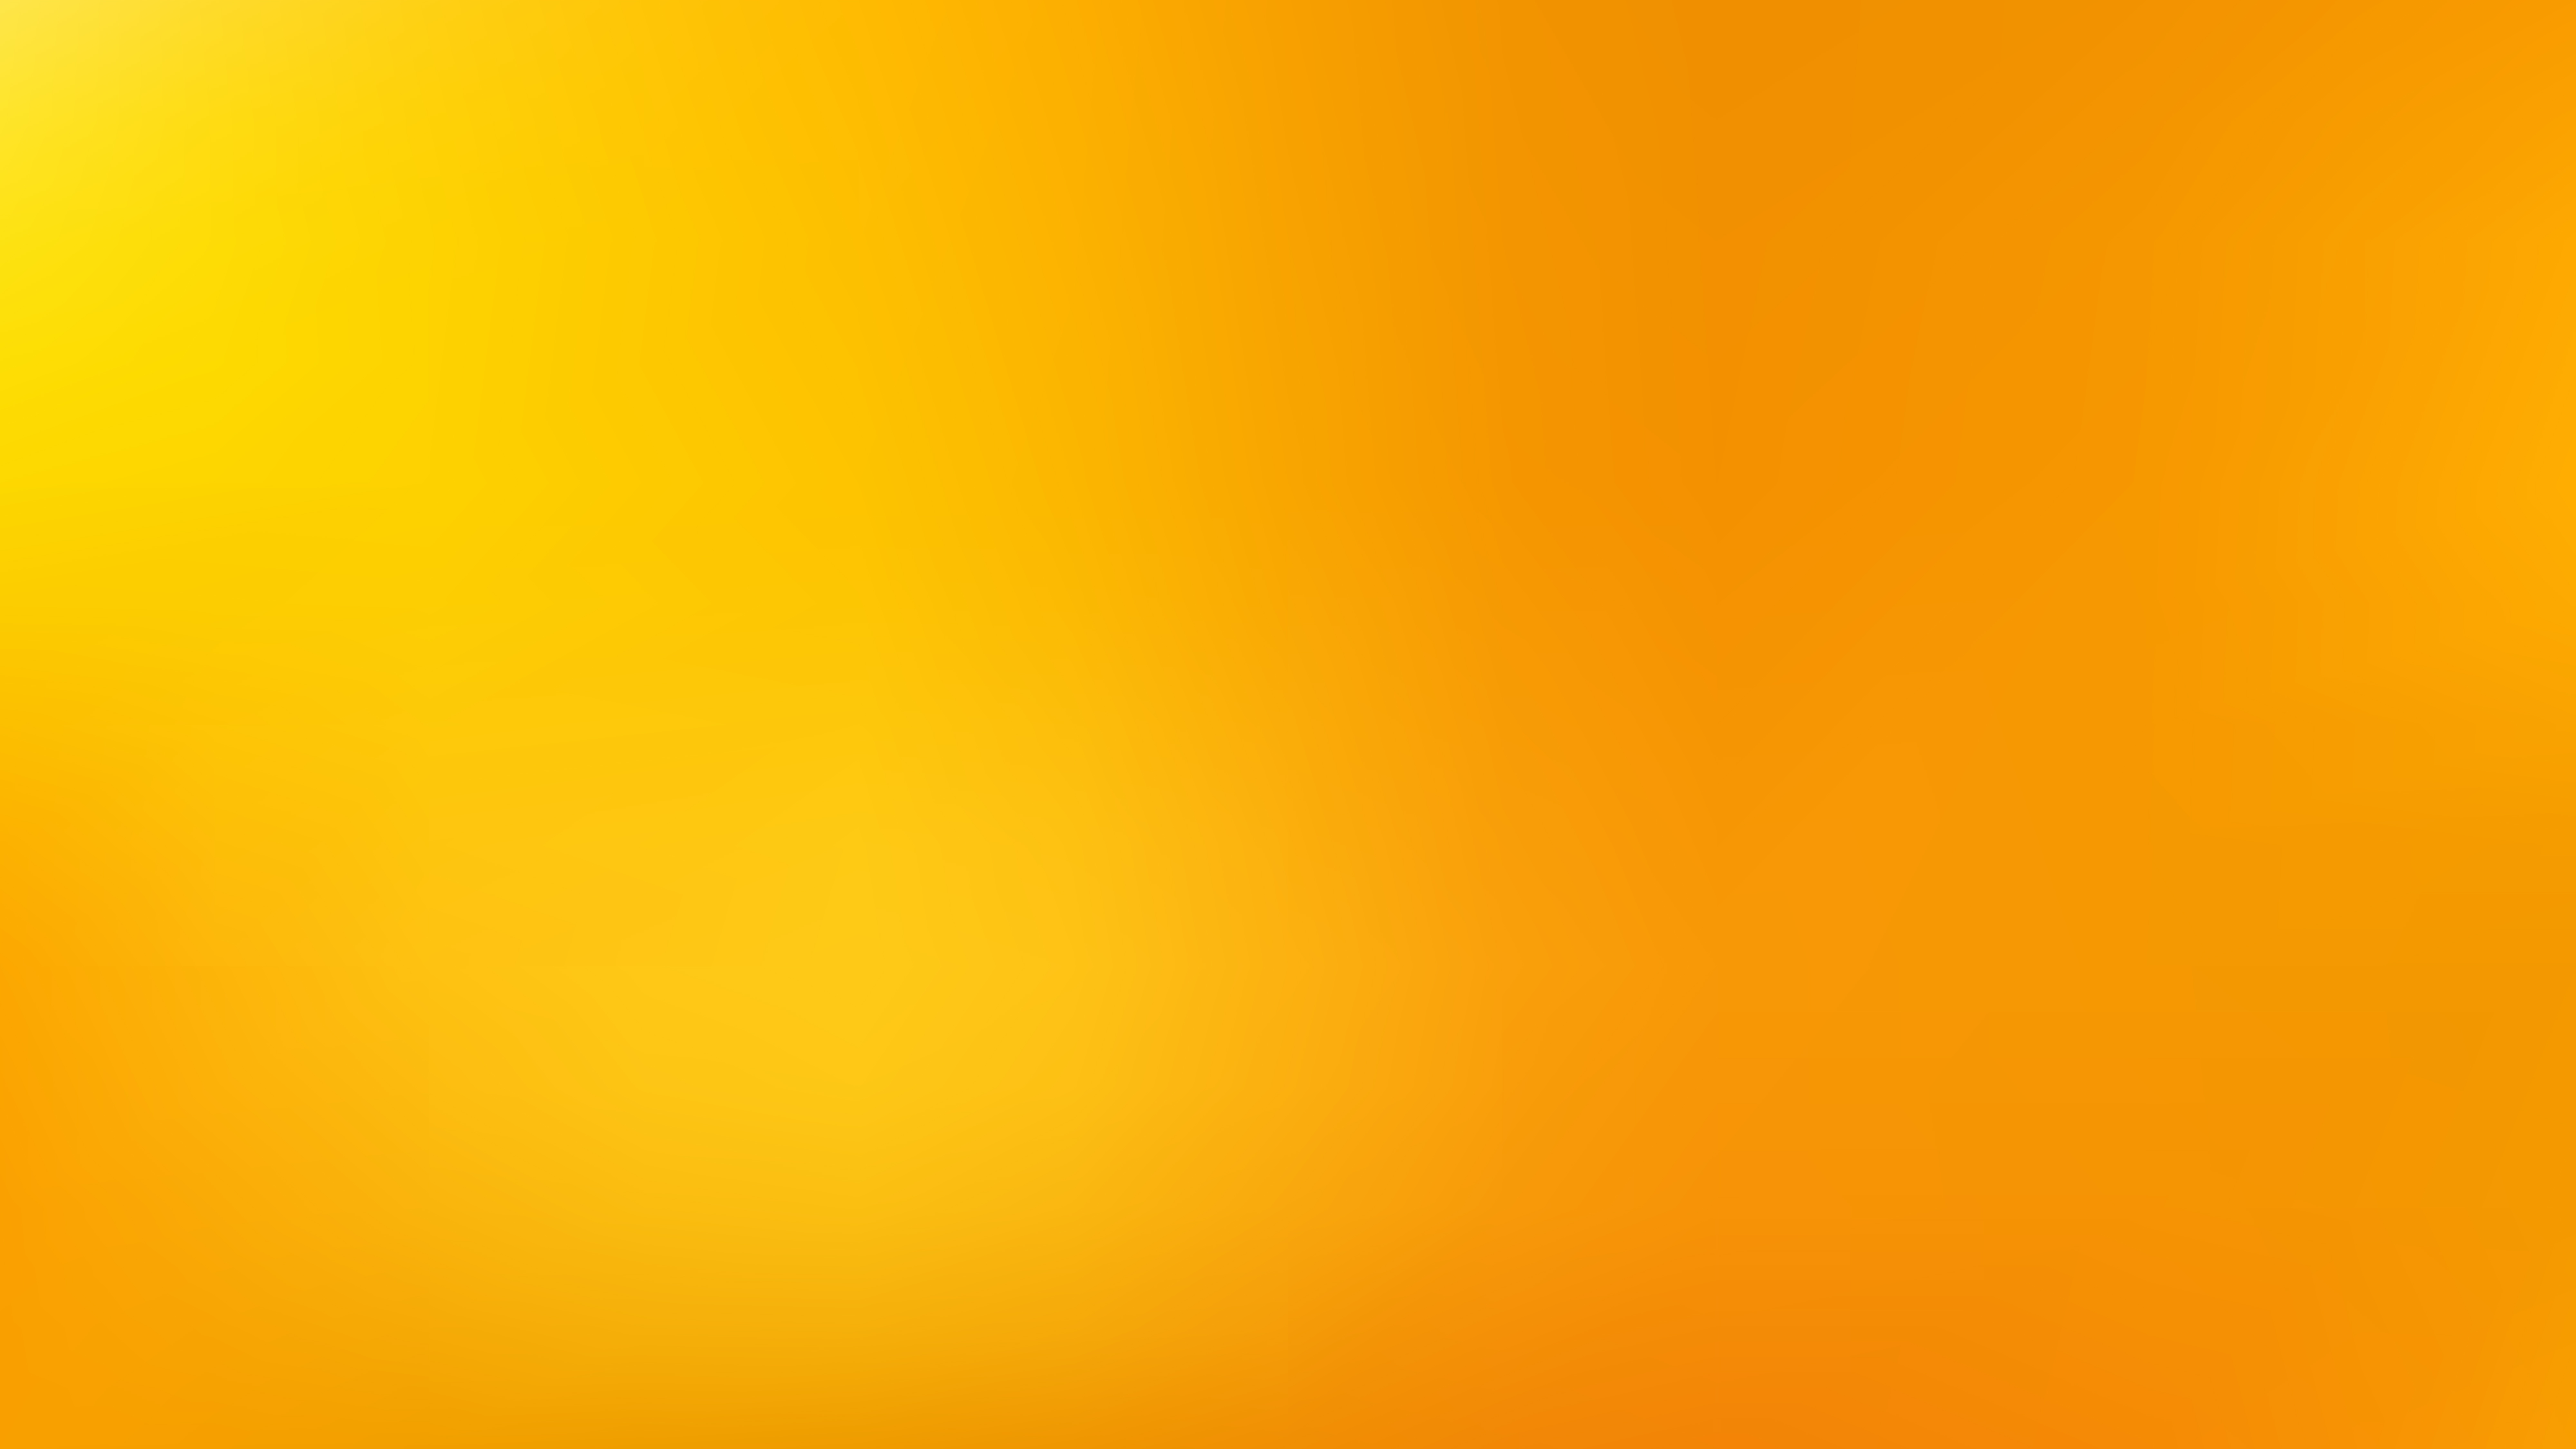 Free Orange and Yellow Professional Background